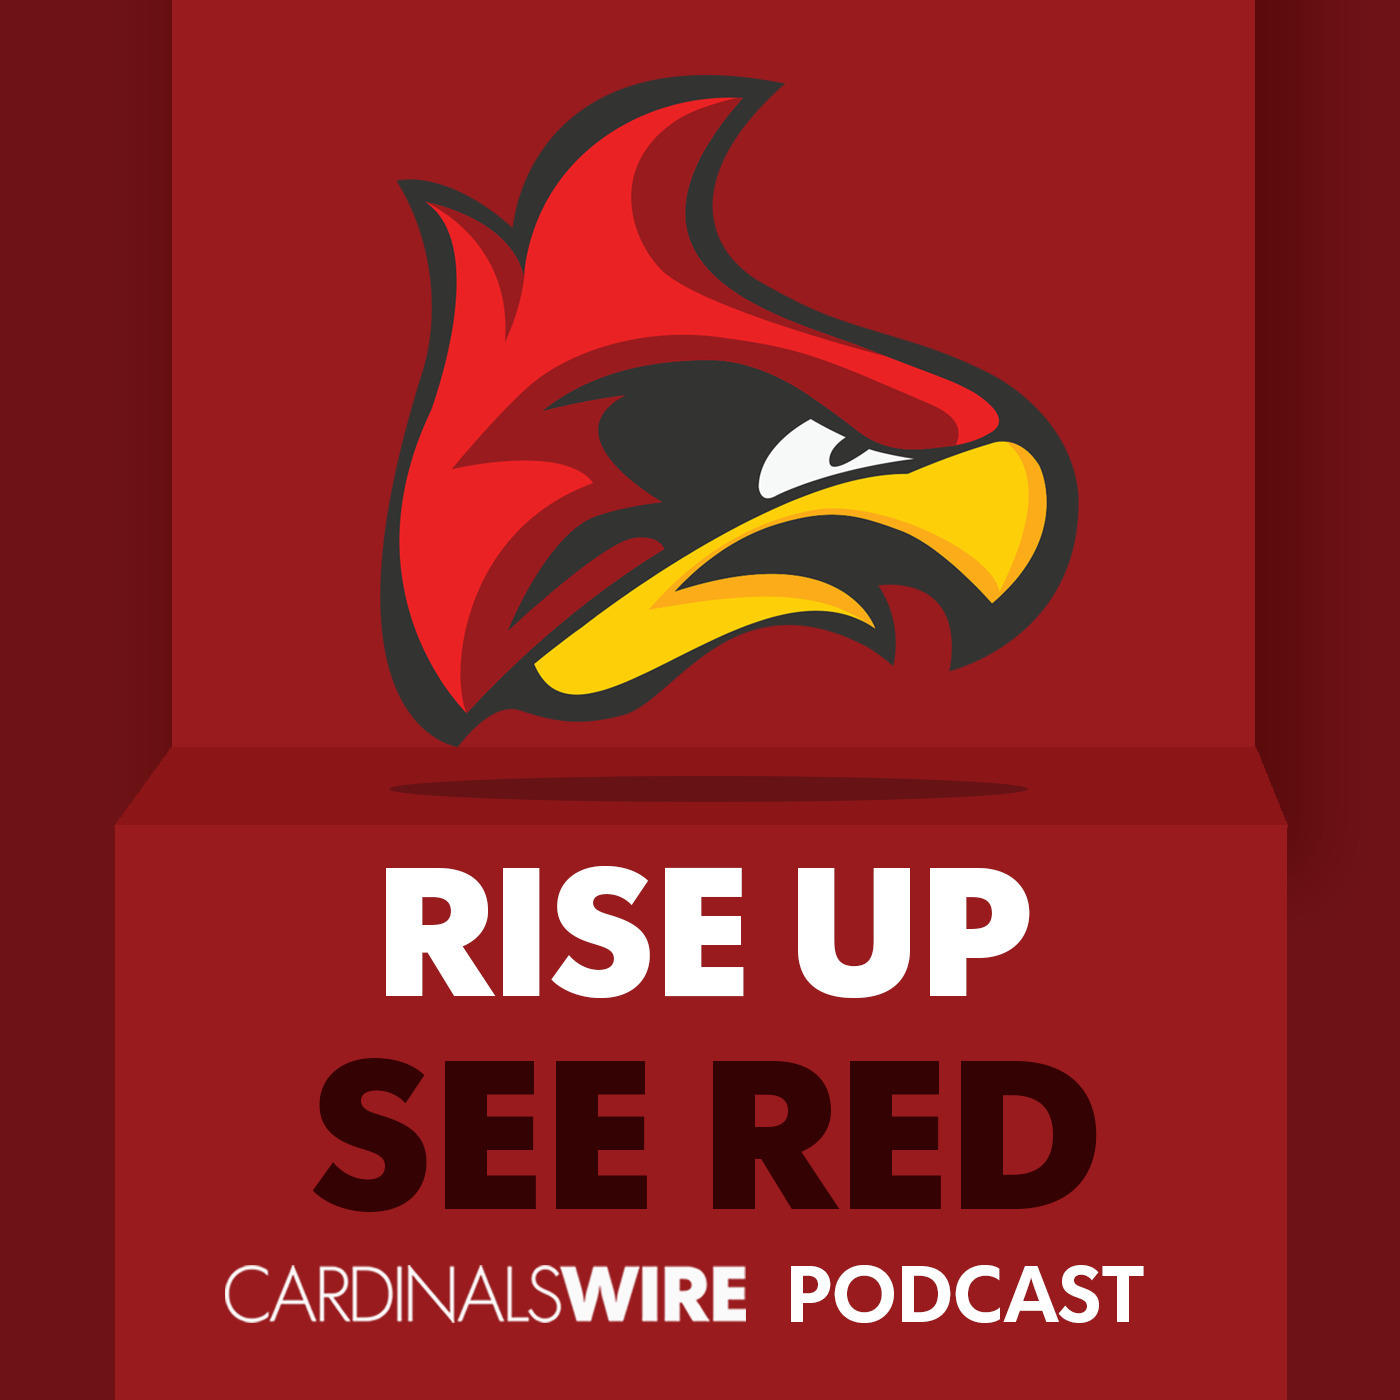 Arizona Cardinals free agency reactions and analysis